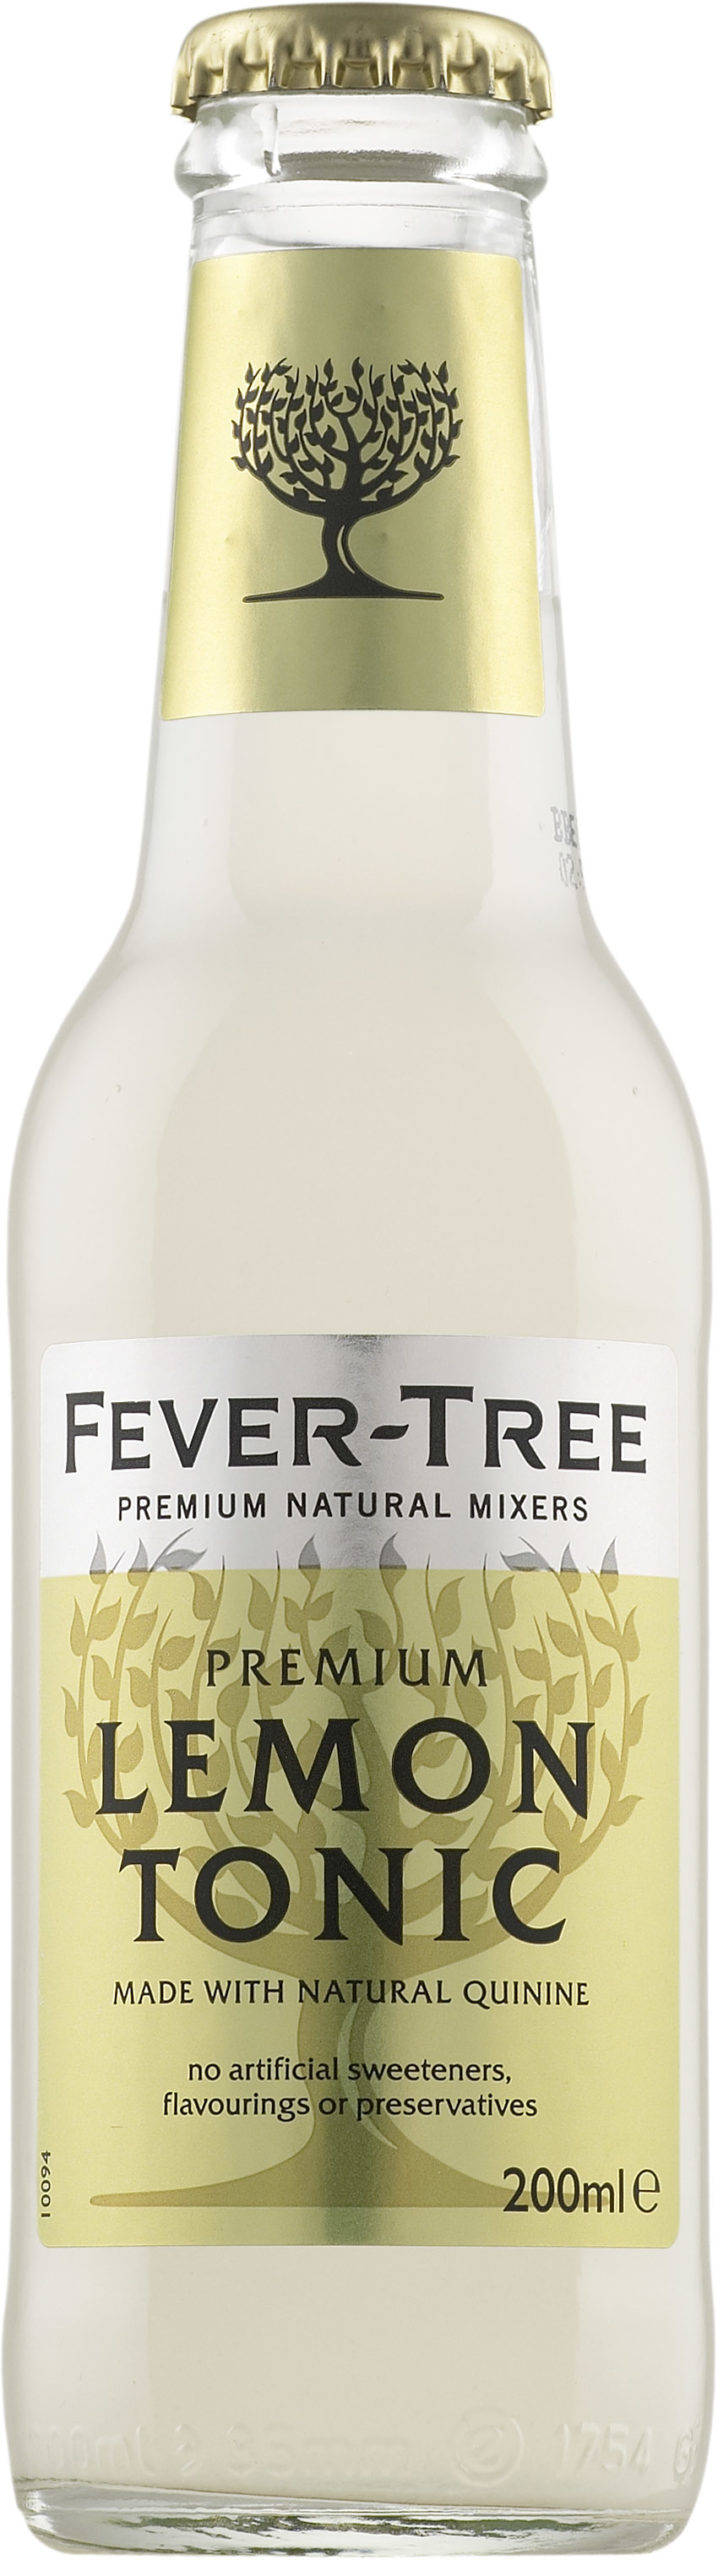 Fever-Tree Fever-Tree Premium Lemon Tonic Water